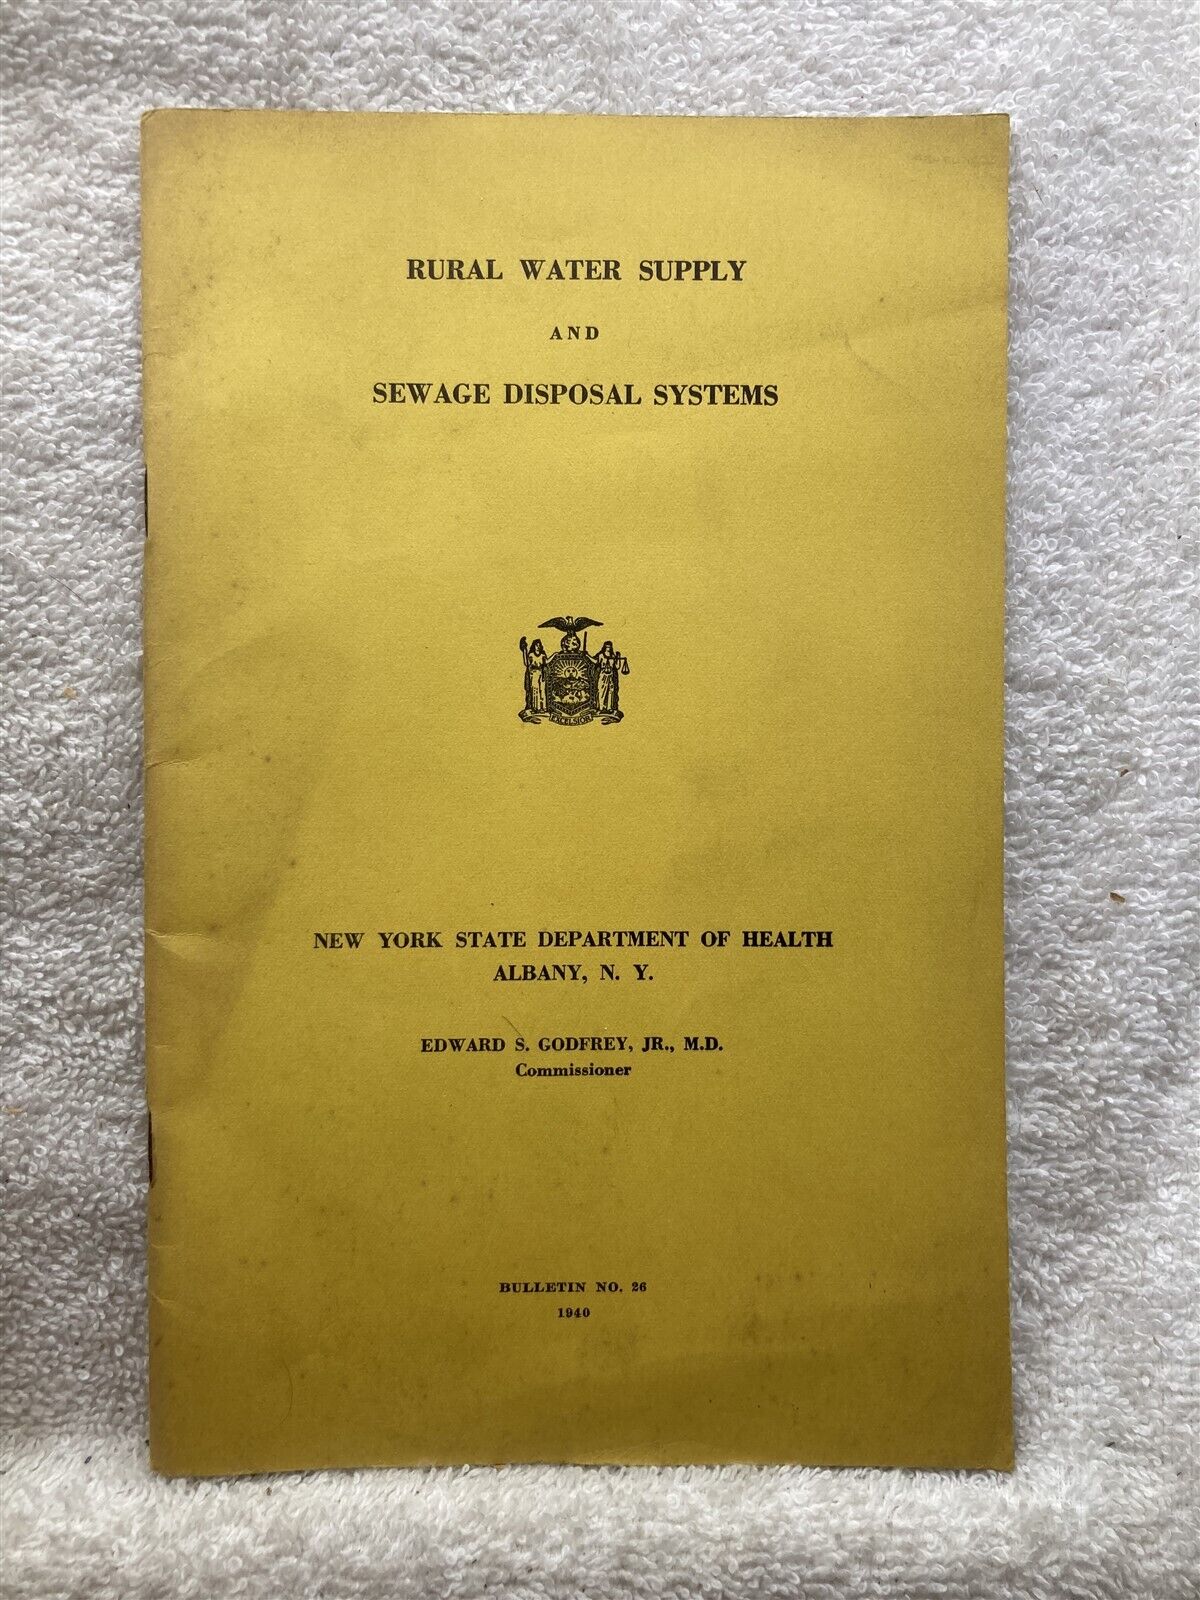 1940 New York State Department of Health Rural Water Supply Sewage Disposal Vtg